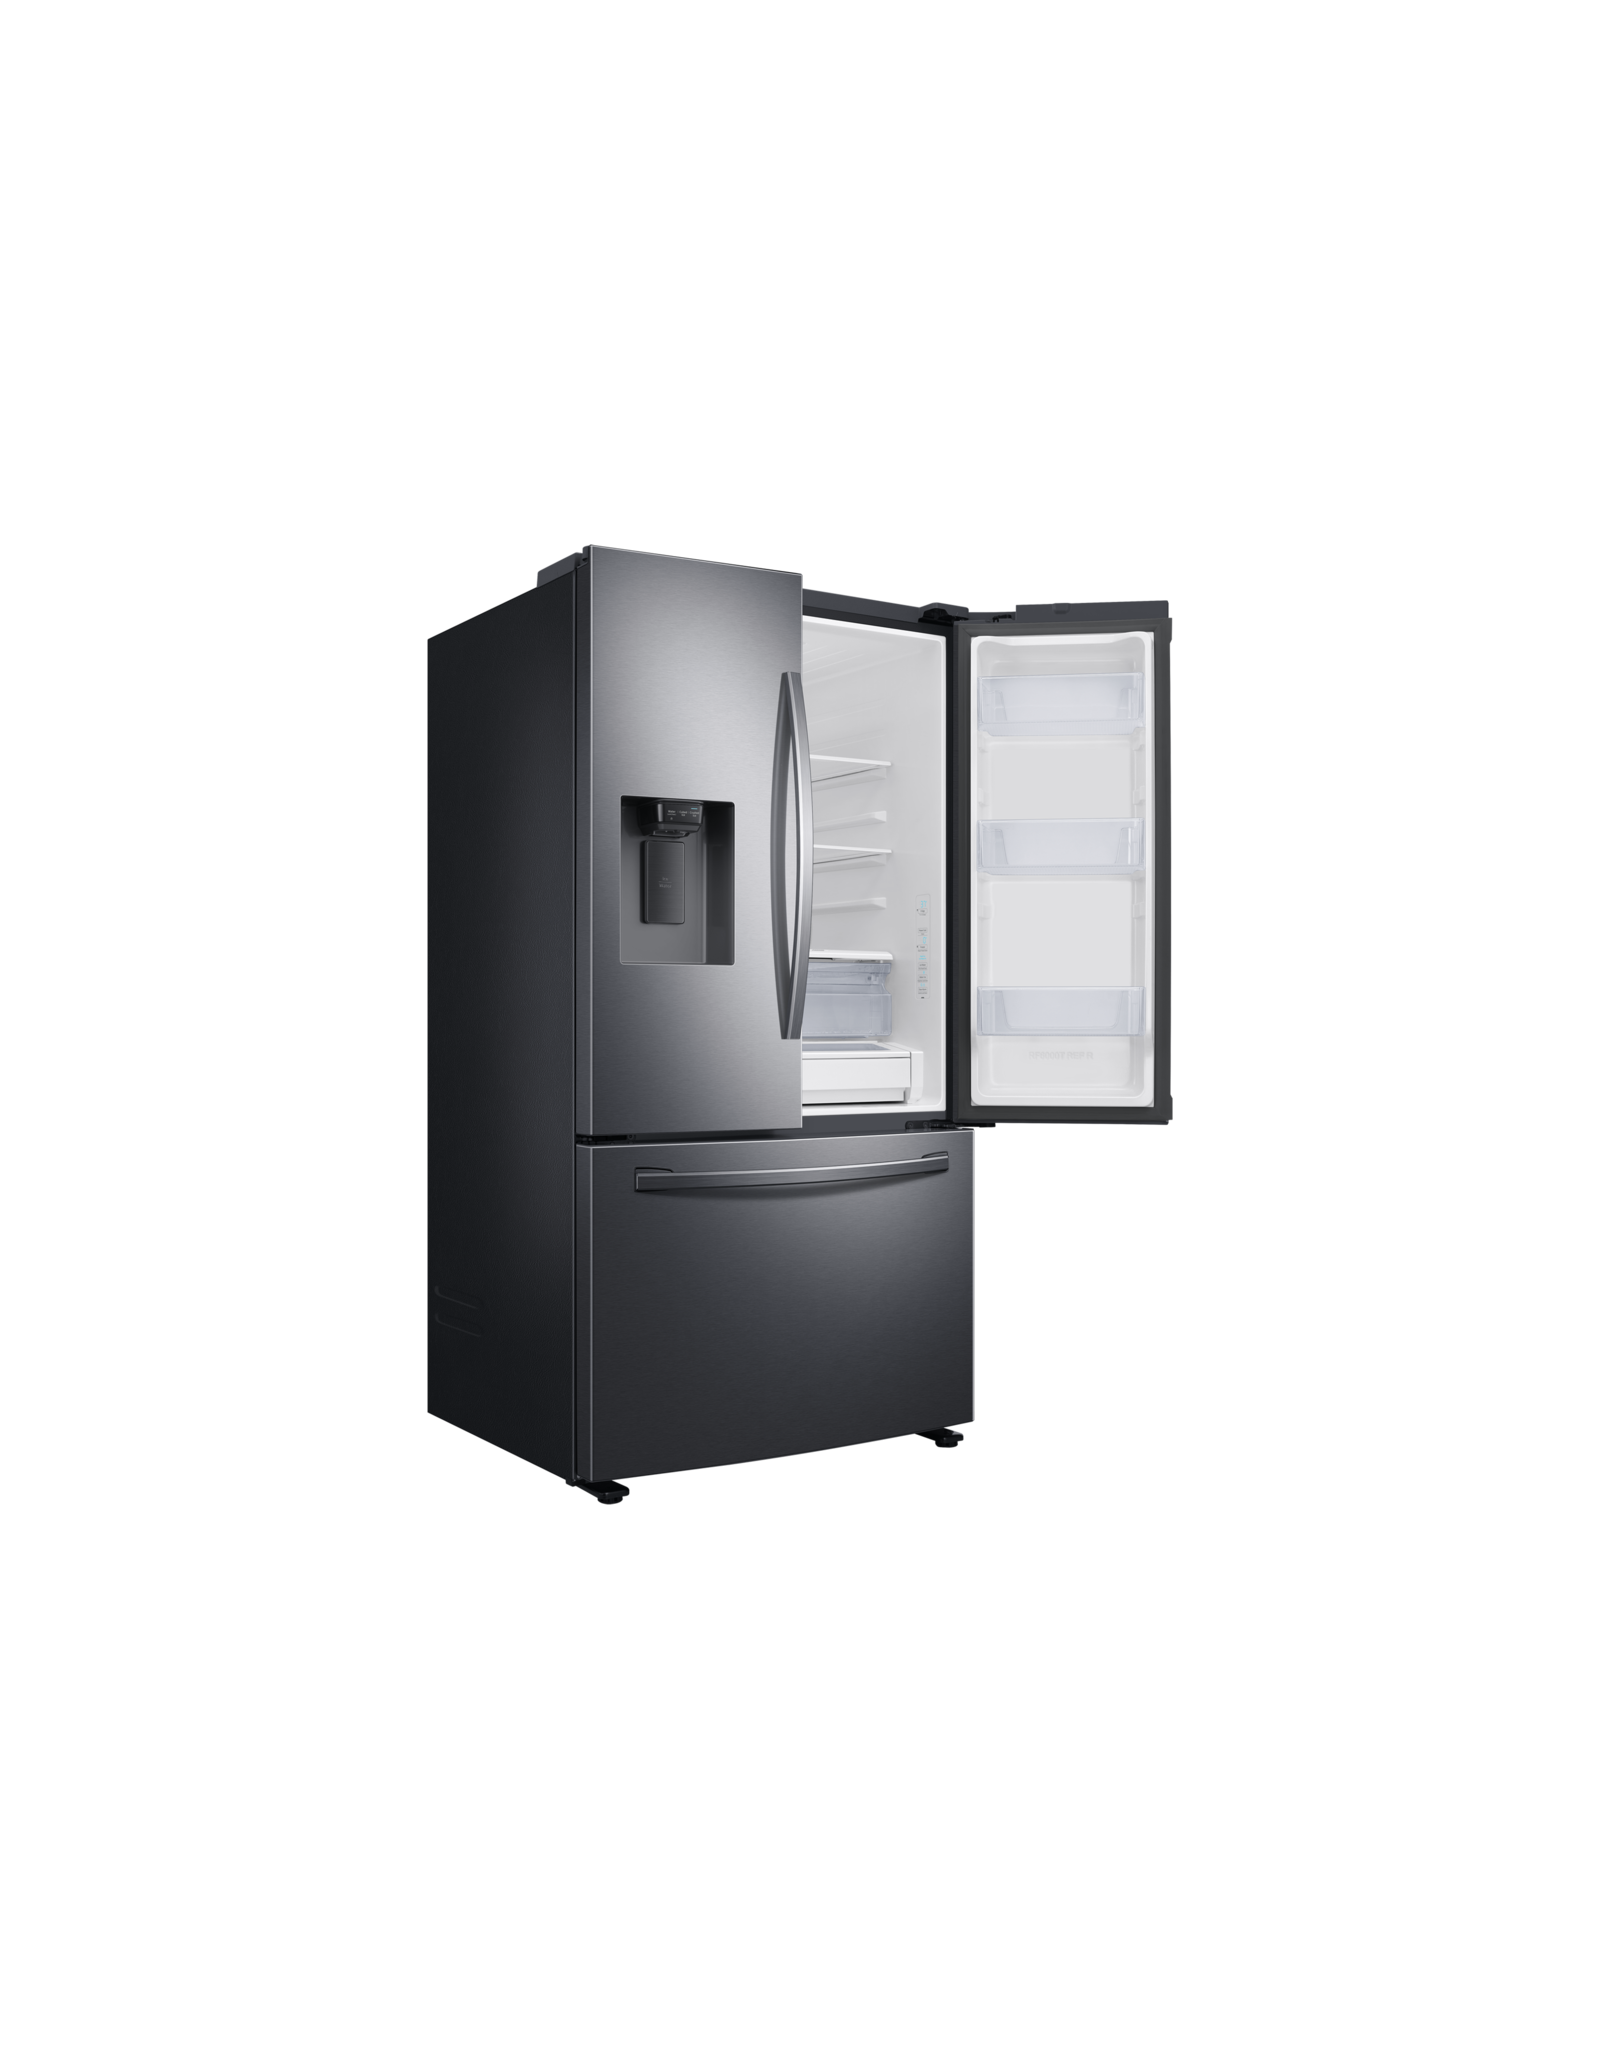 RF27T5201SG 27 cu. ft. French Door Refrigerator in Fingerprint Resistant Black Stainless Steel